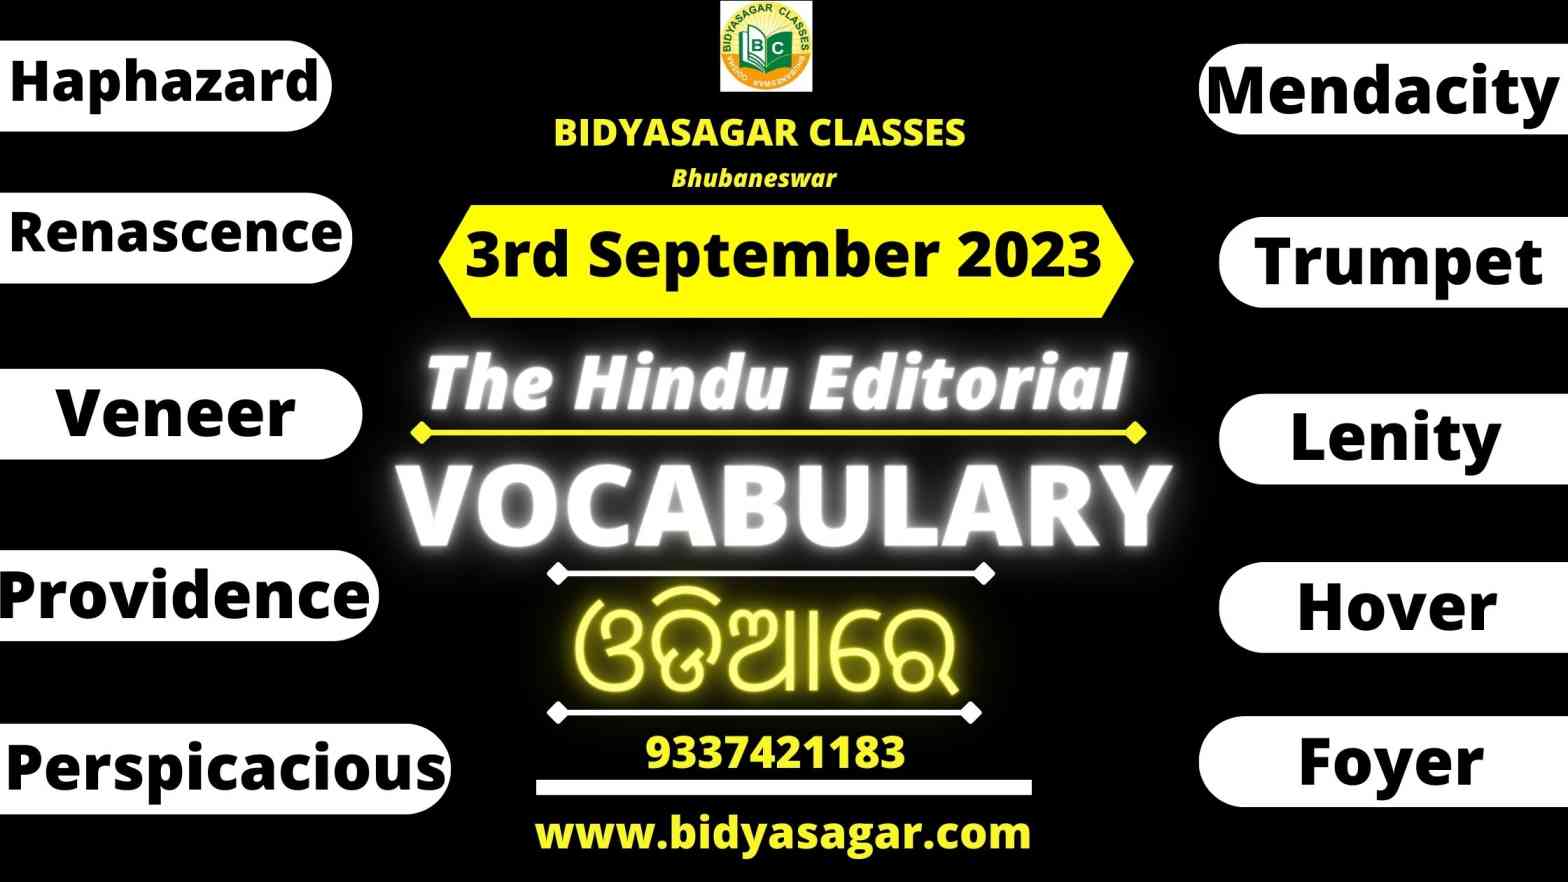 The Hindu Editorial Vocabulary of 3rd September 2023